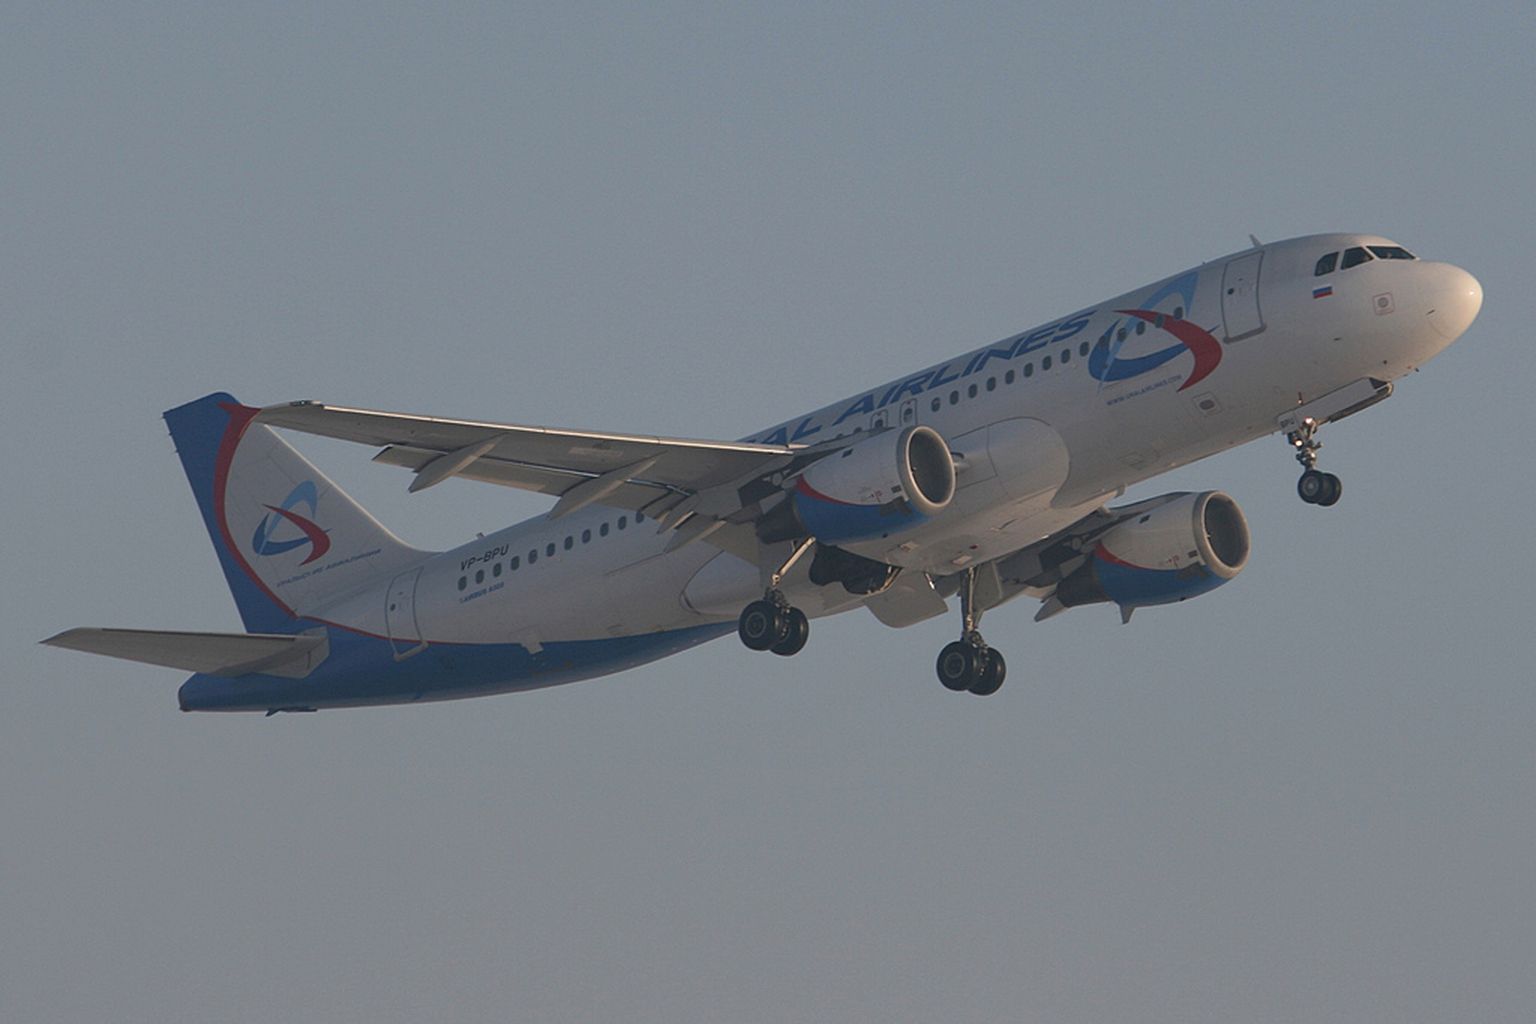 Ural Airlines lendab poolesaja Airbusiga.